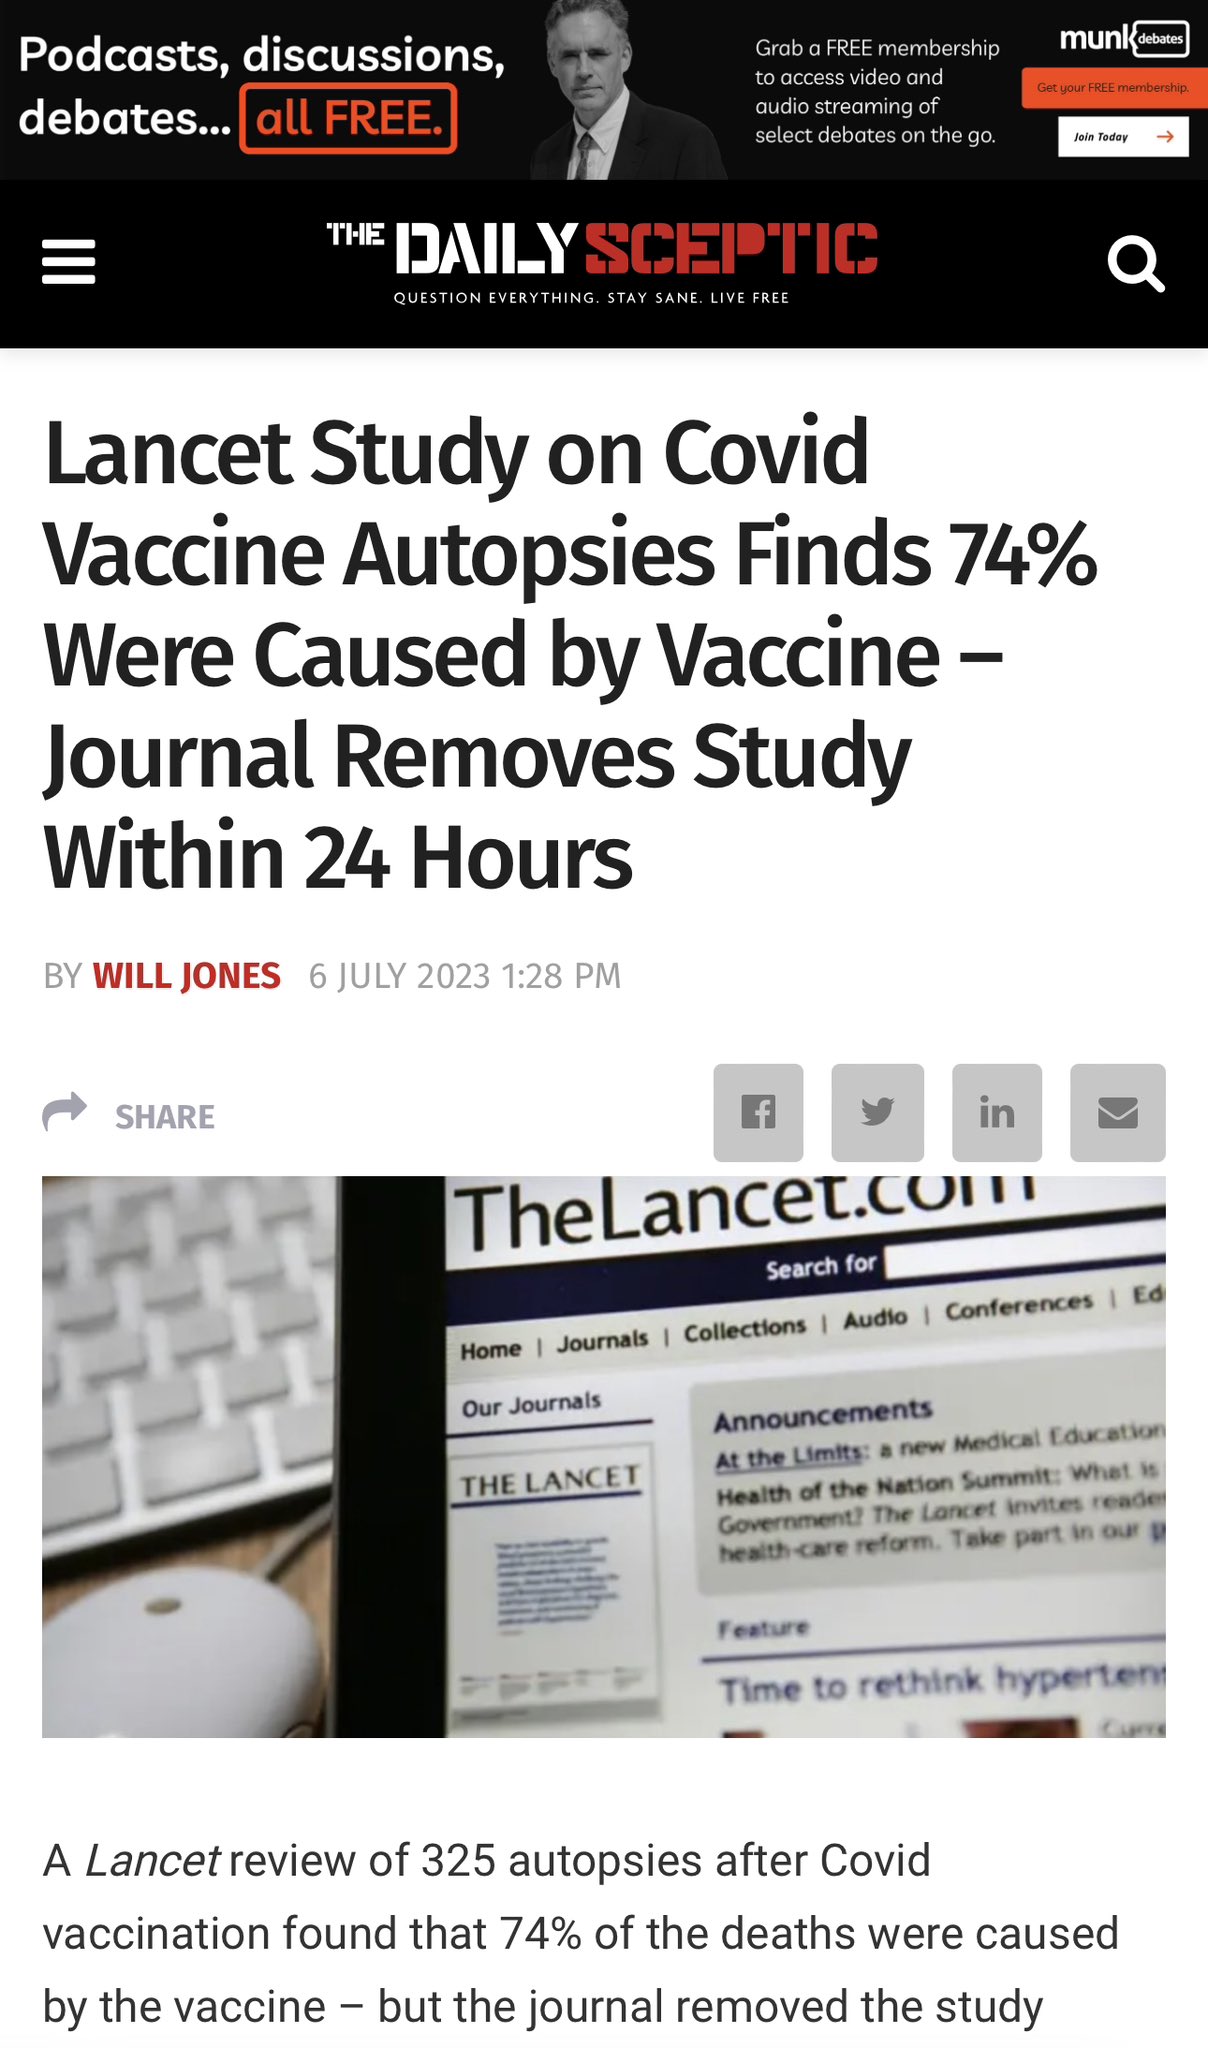 LancetStudie gespeert News.jpg